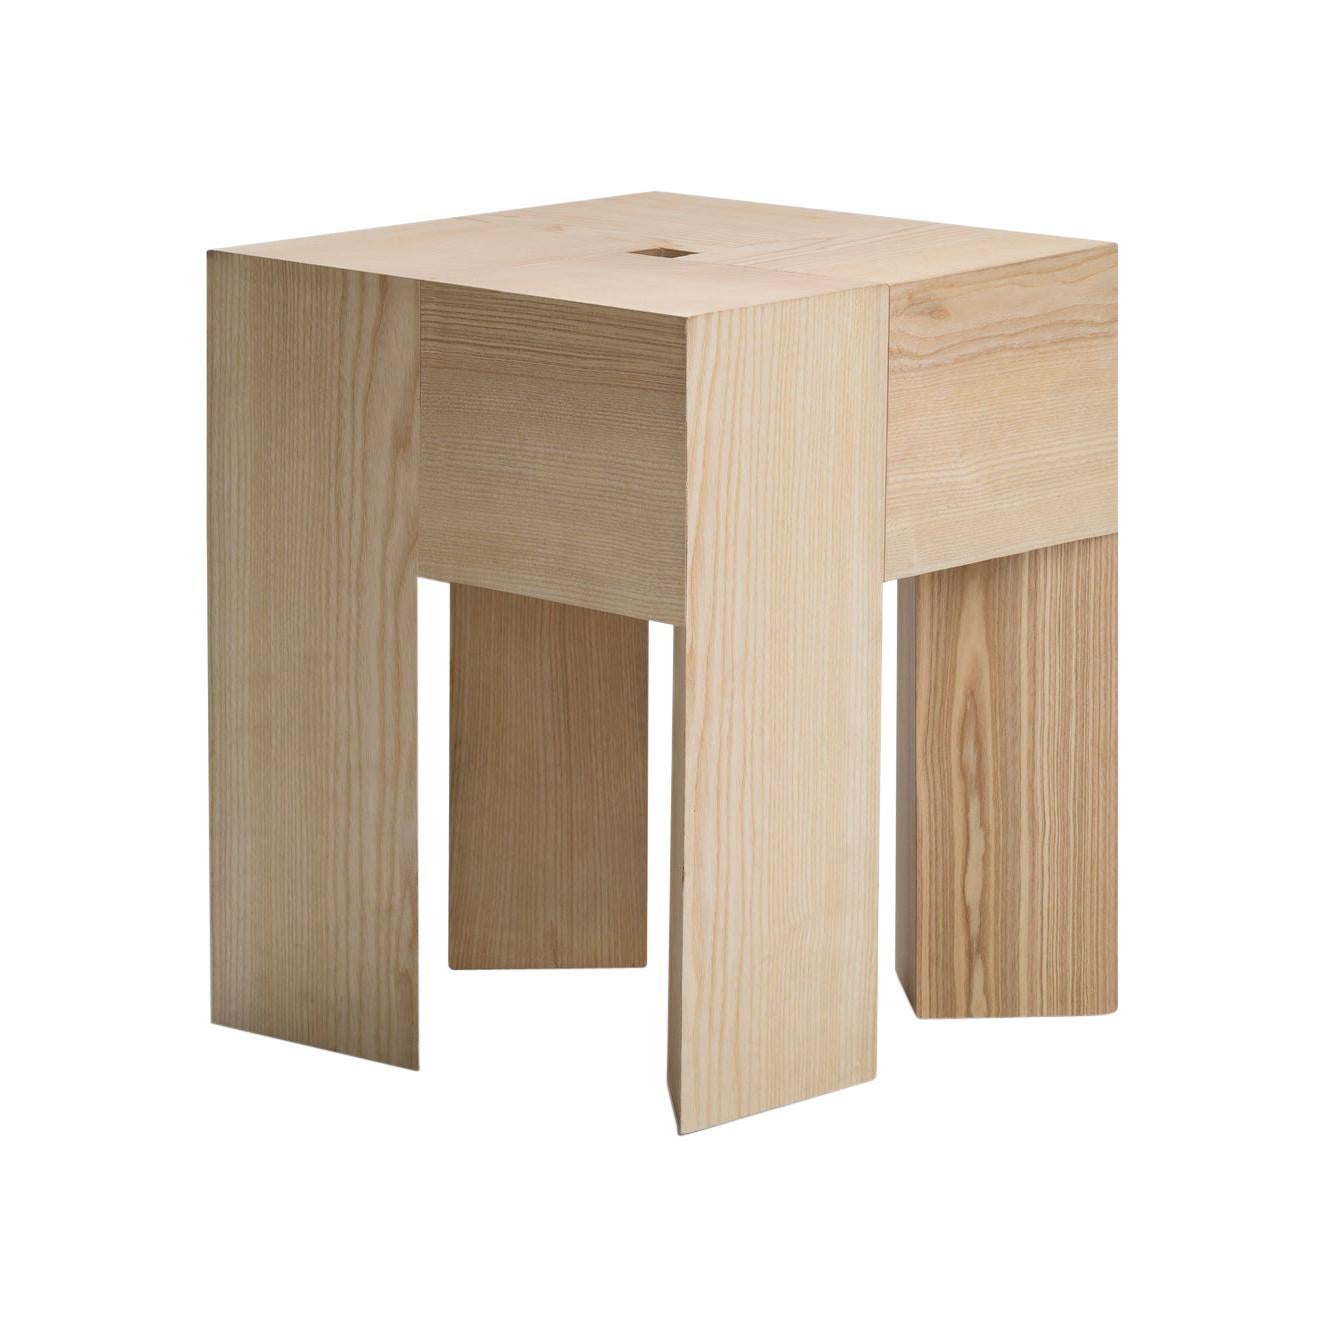 Aldo Bakker 'Triangle' Wood Stool or Side Table